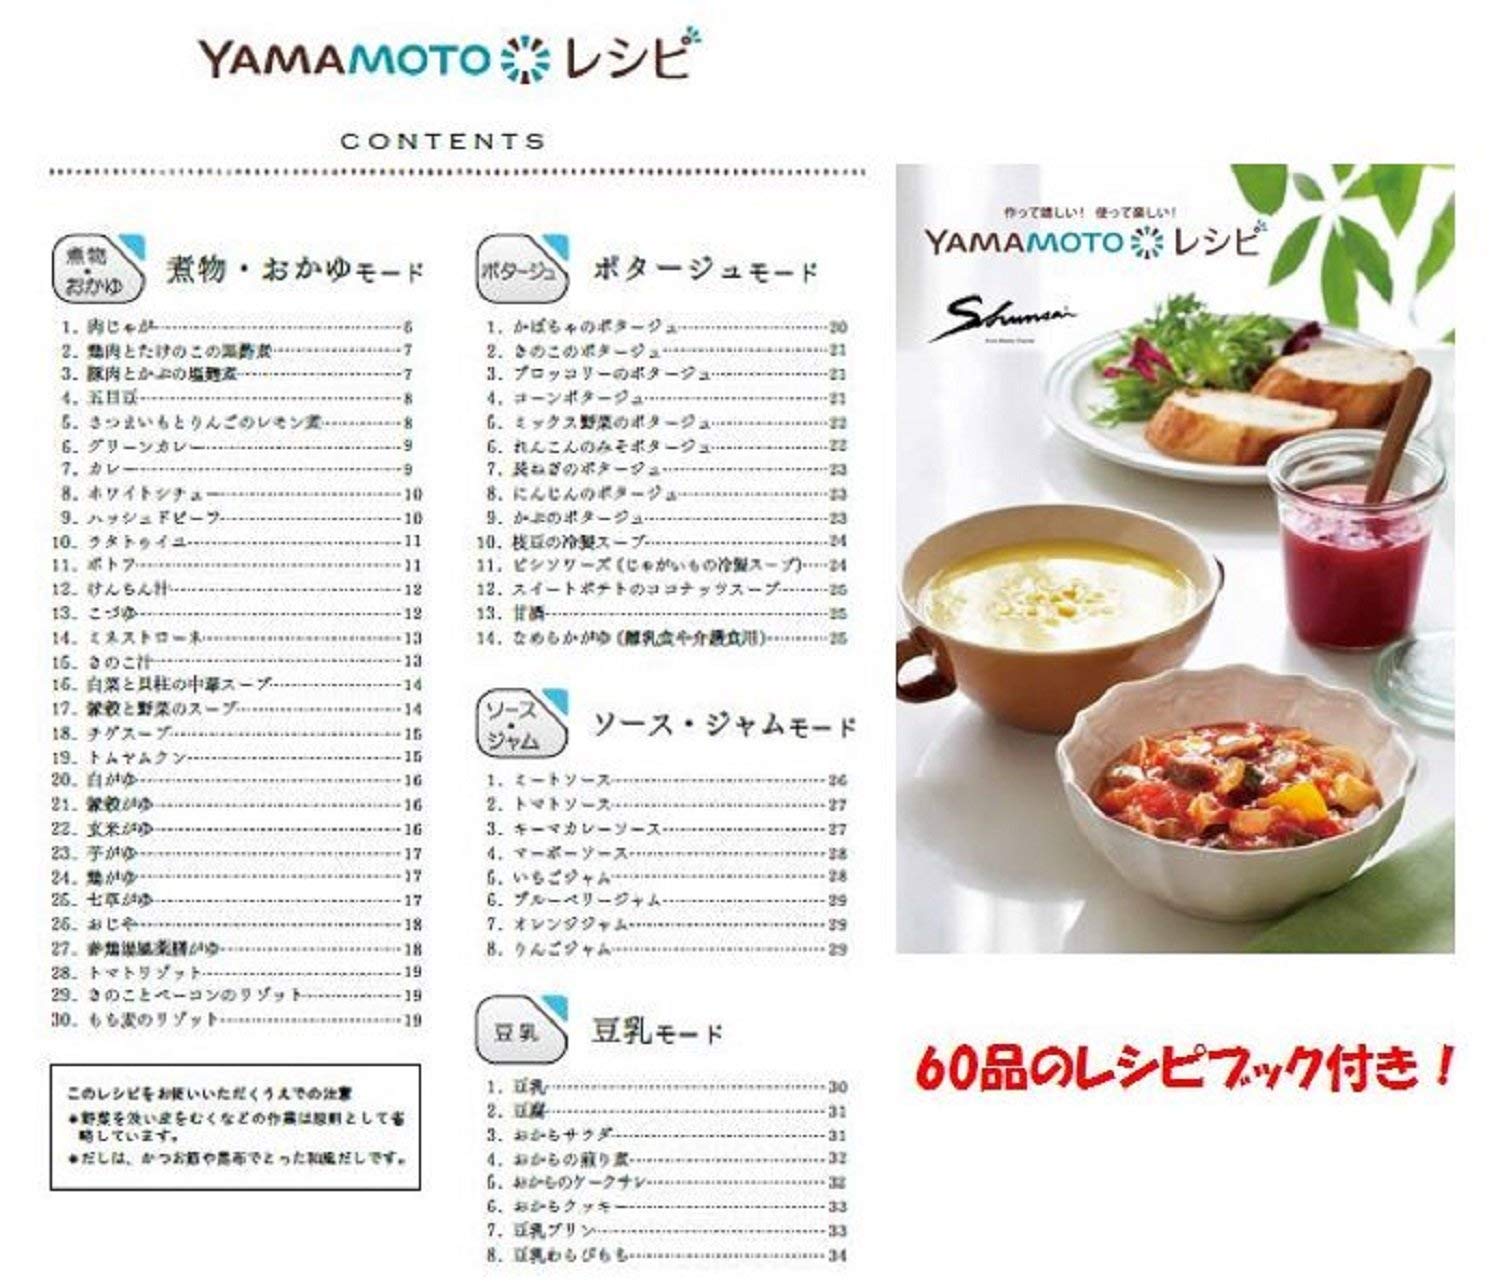 YAMAMOTO クックマスター Shunsai(旬彩) ホワイト 